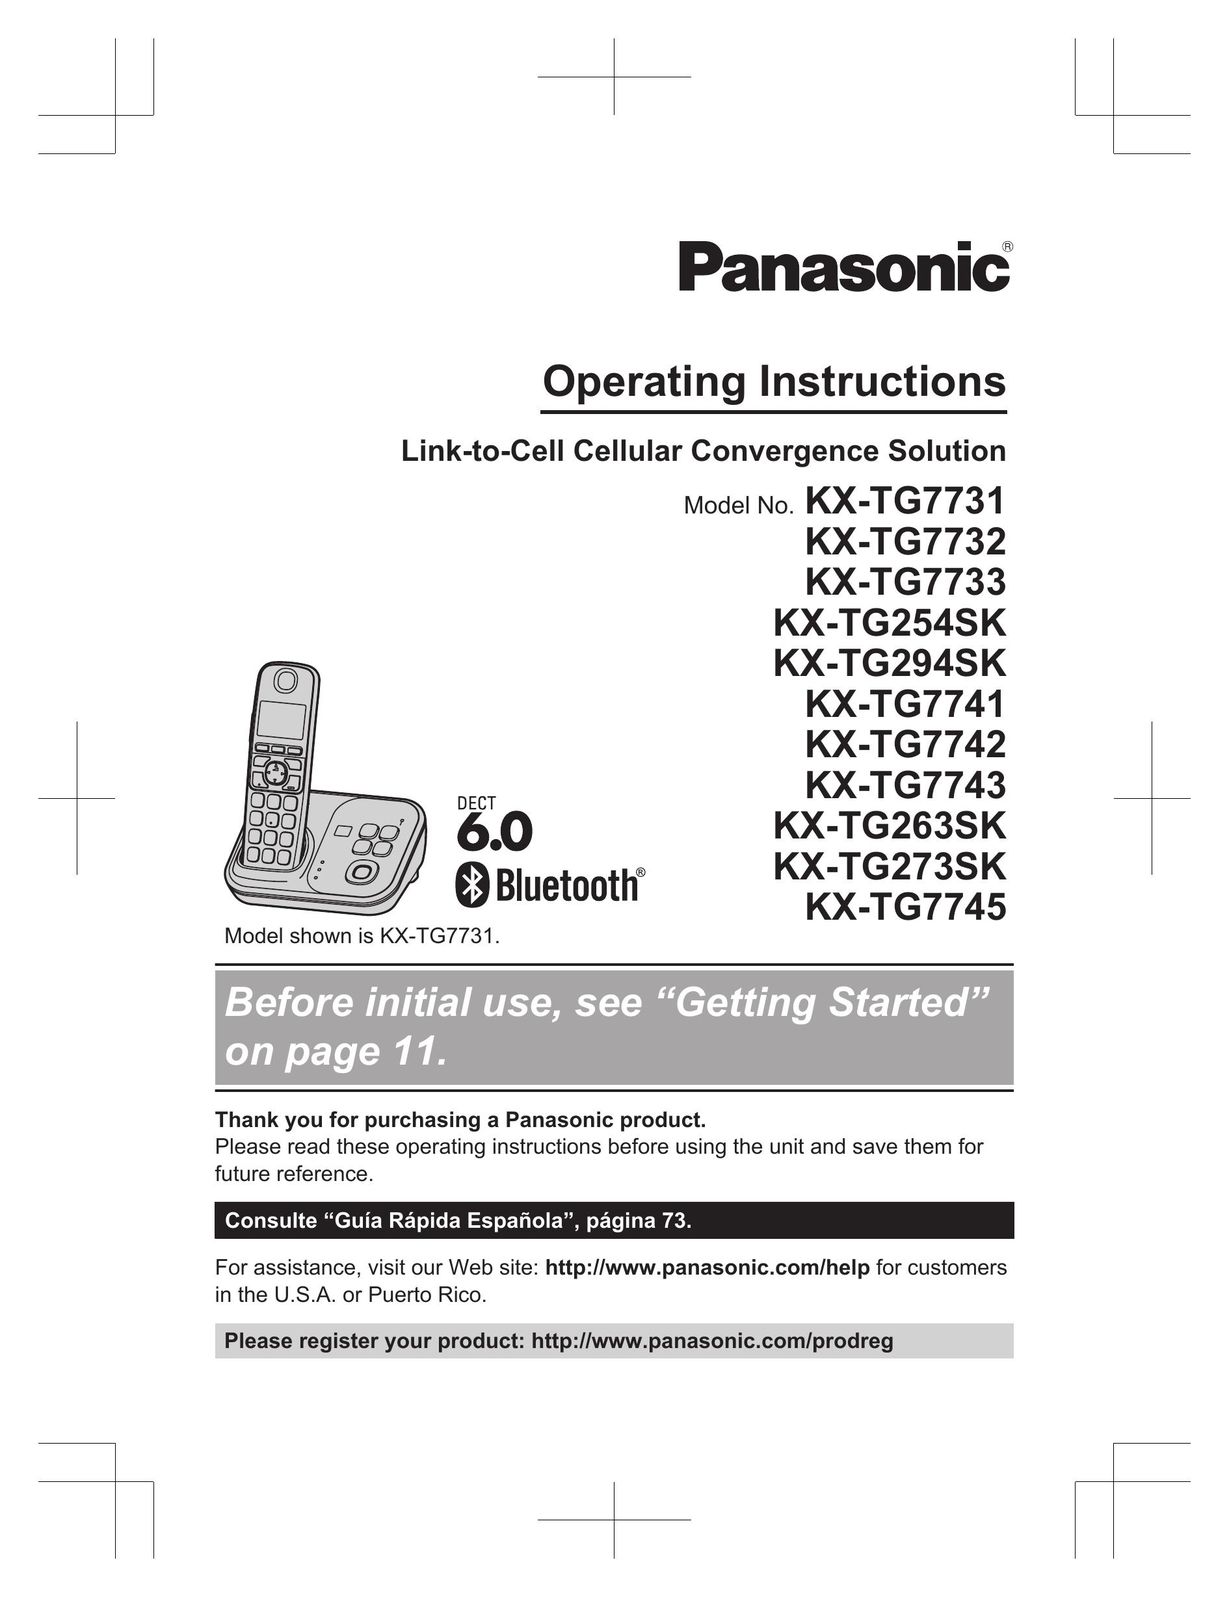 Panasonic KX-TG7745 Carrying Case User Manual